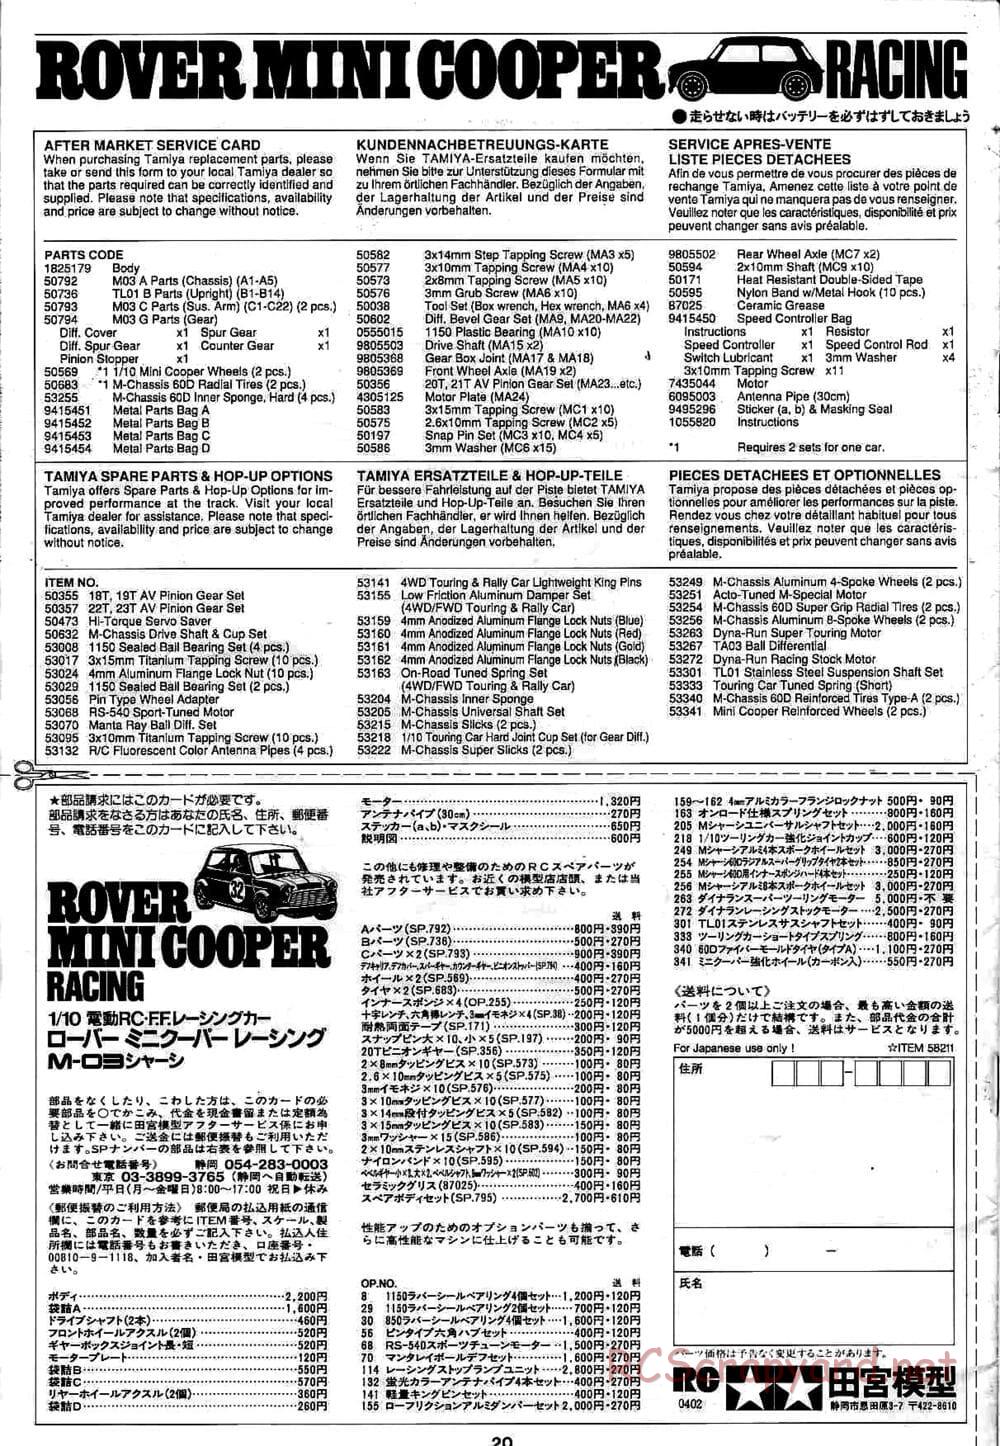 Tamiya - Rover Mini Cooper Racing - M03 Chassis - Manual - Page 20